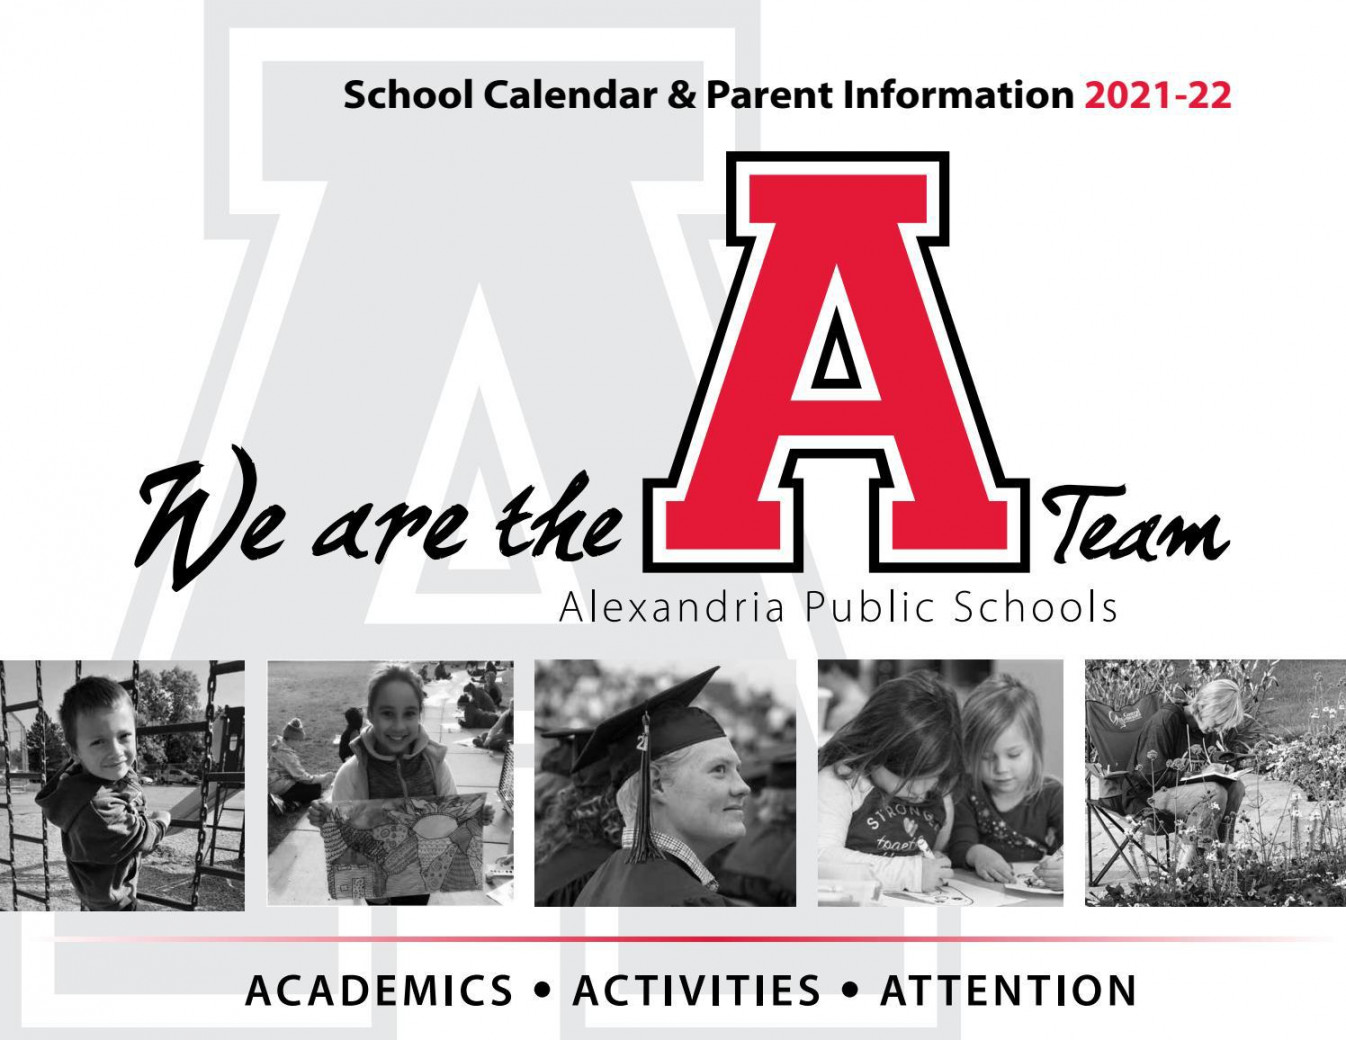 - School Calendar and Parent Information by Alexandria